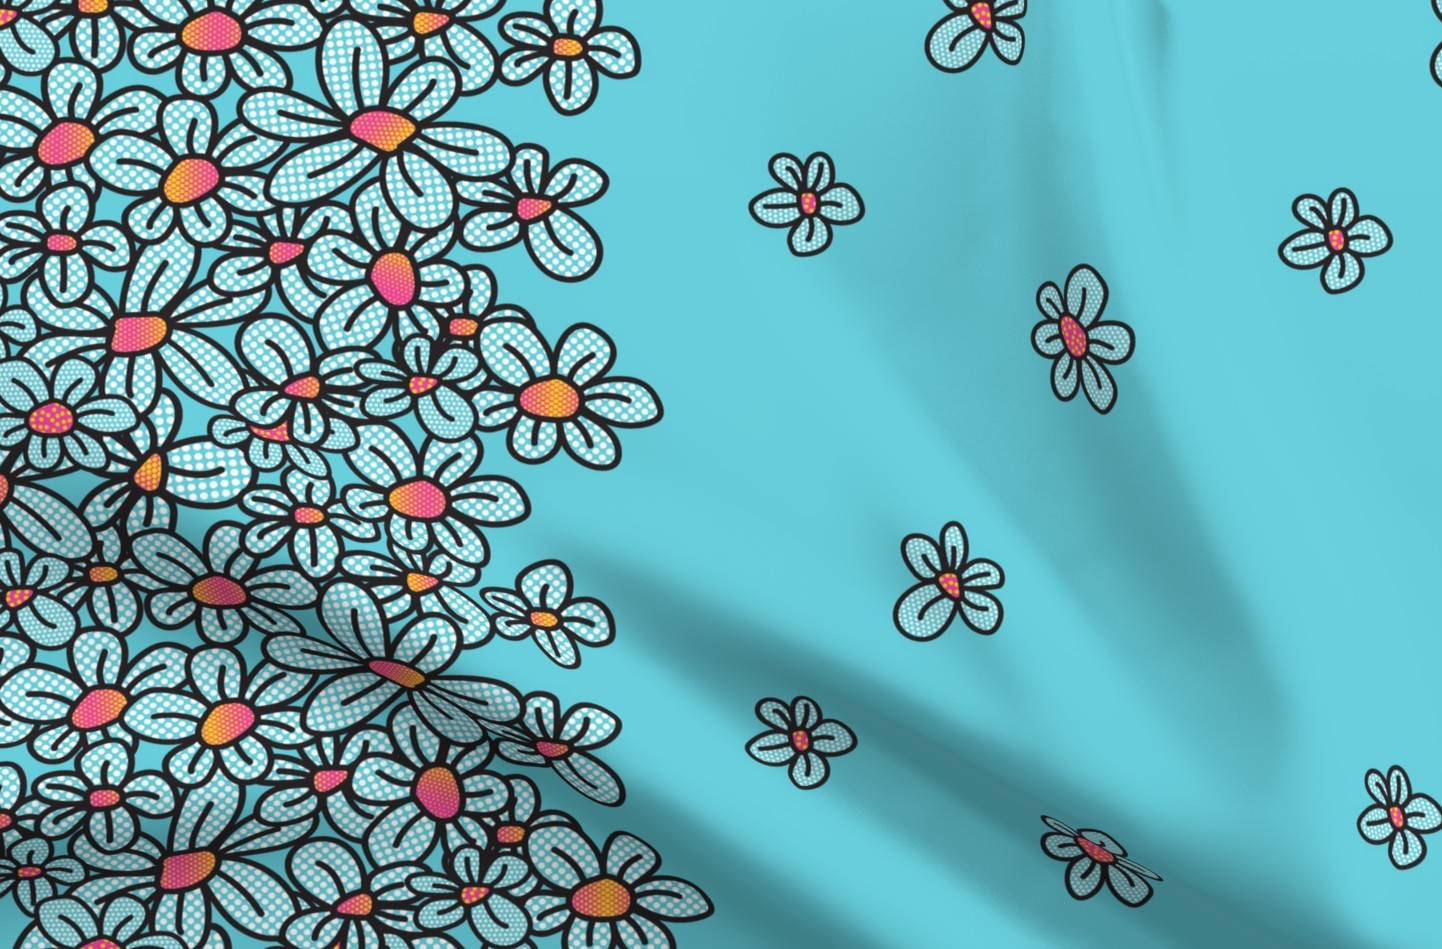 Flower Pop! Aqua Border Printed Fabric by Studio Ten Design